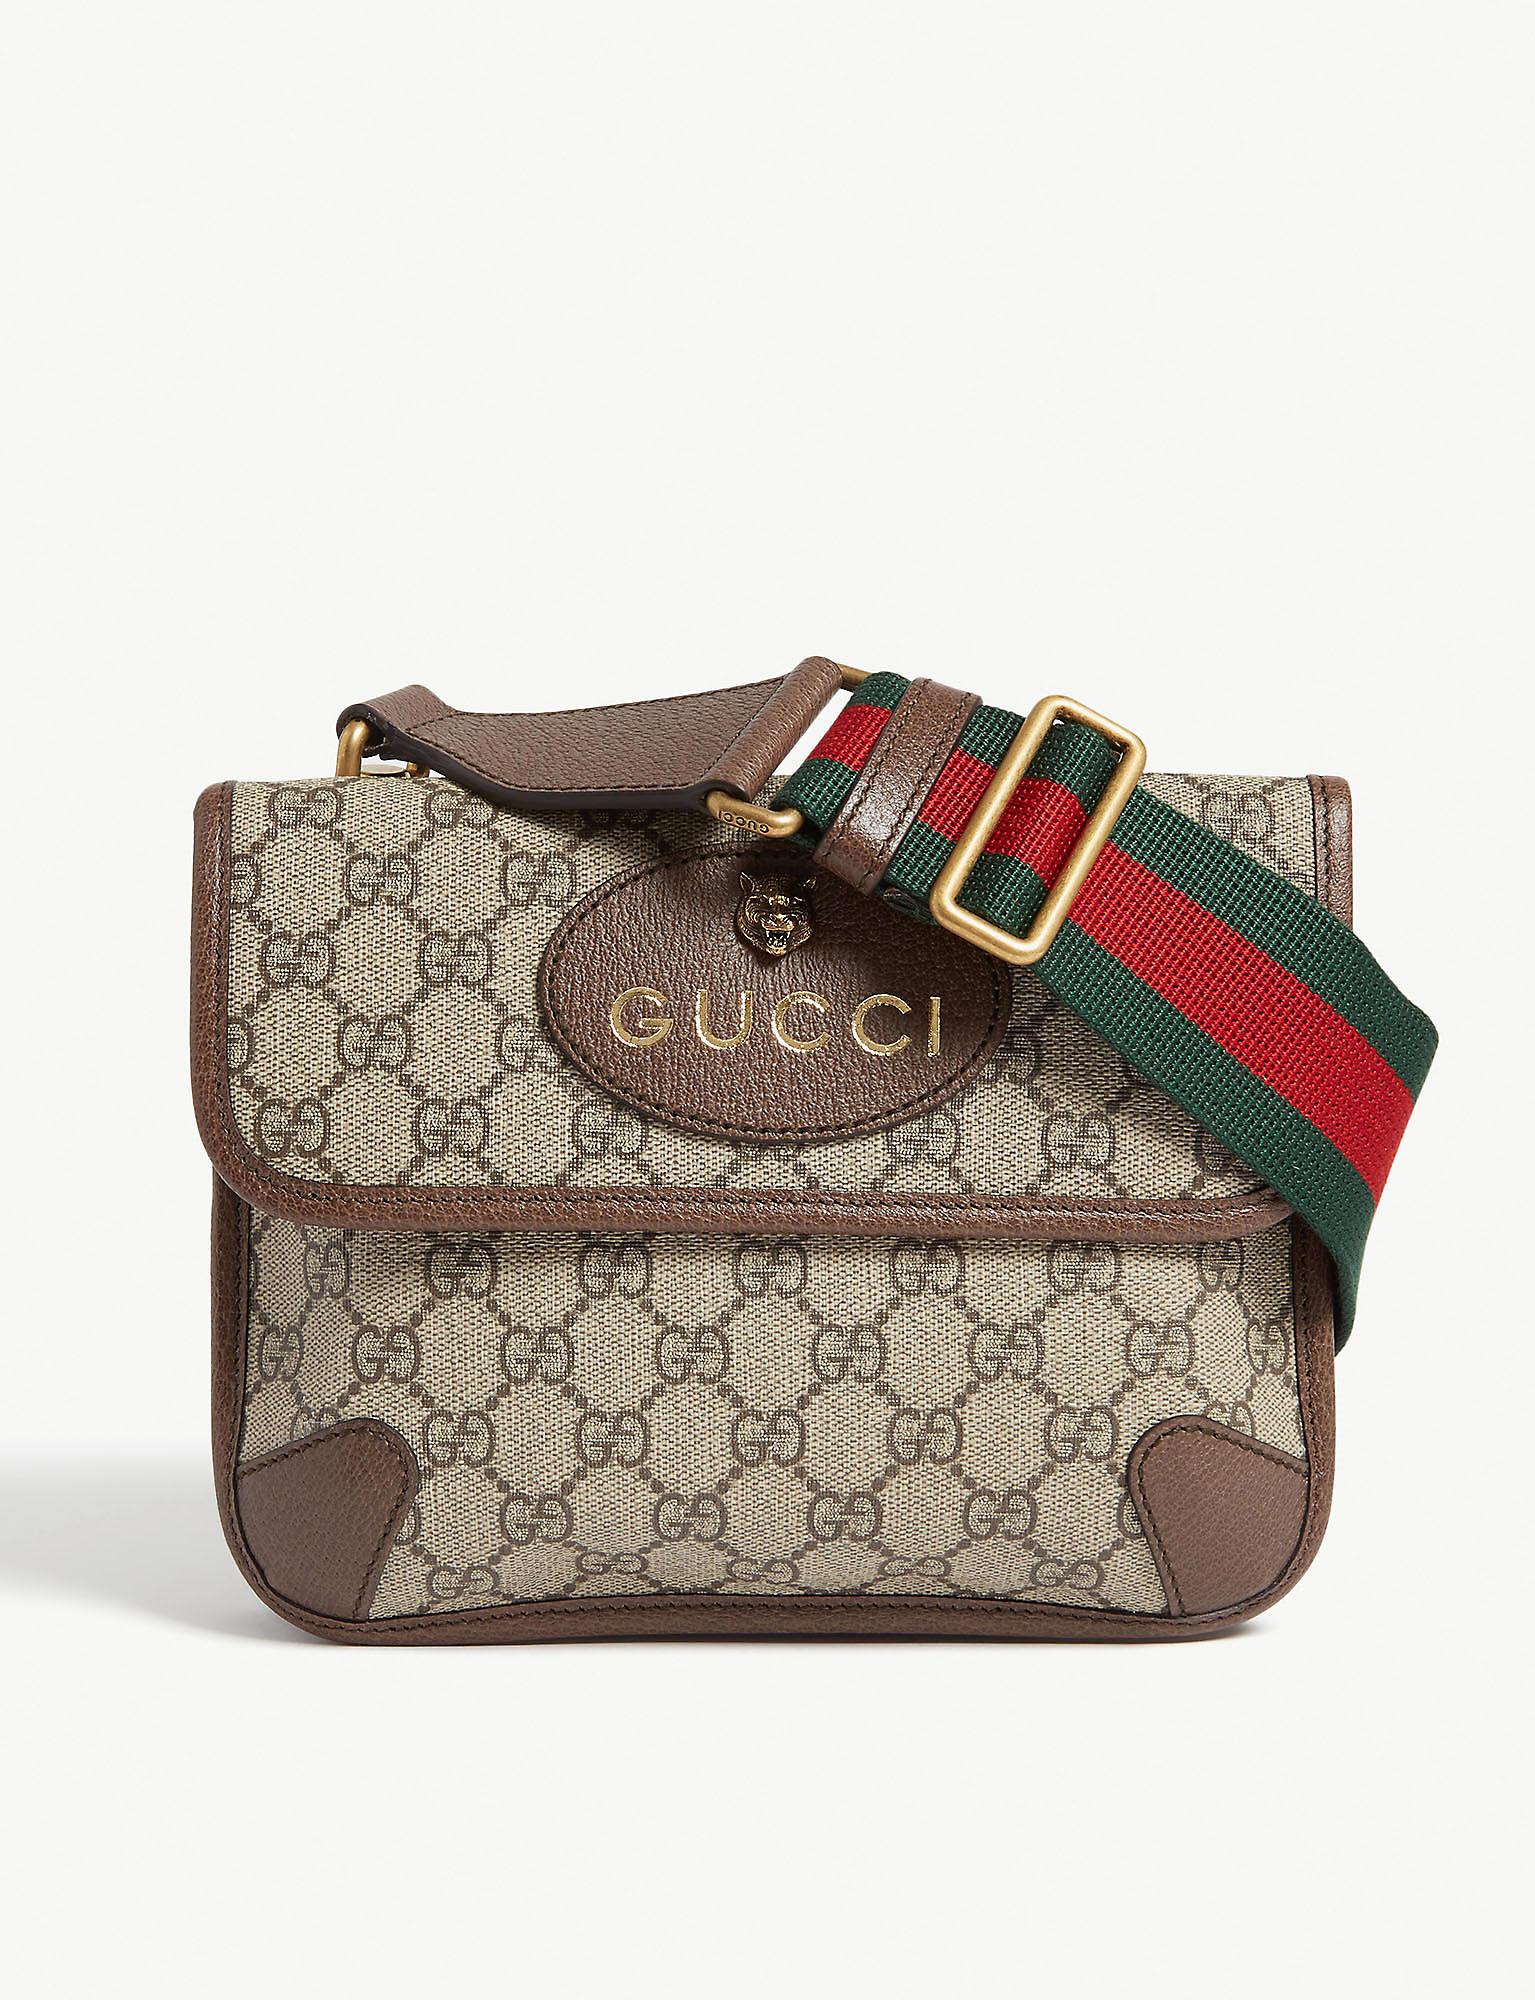 Gucci Neo Vintage Canvas Messenger Bag in Natural for Men - Lyst